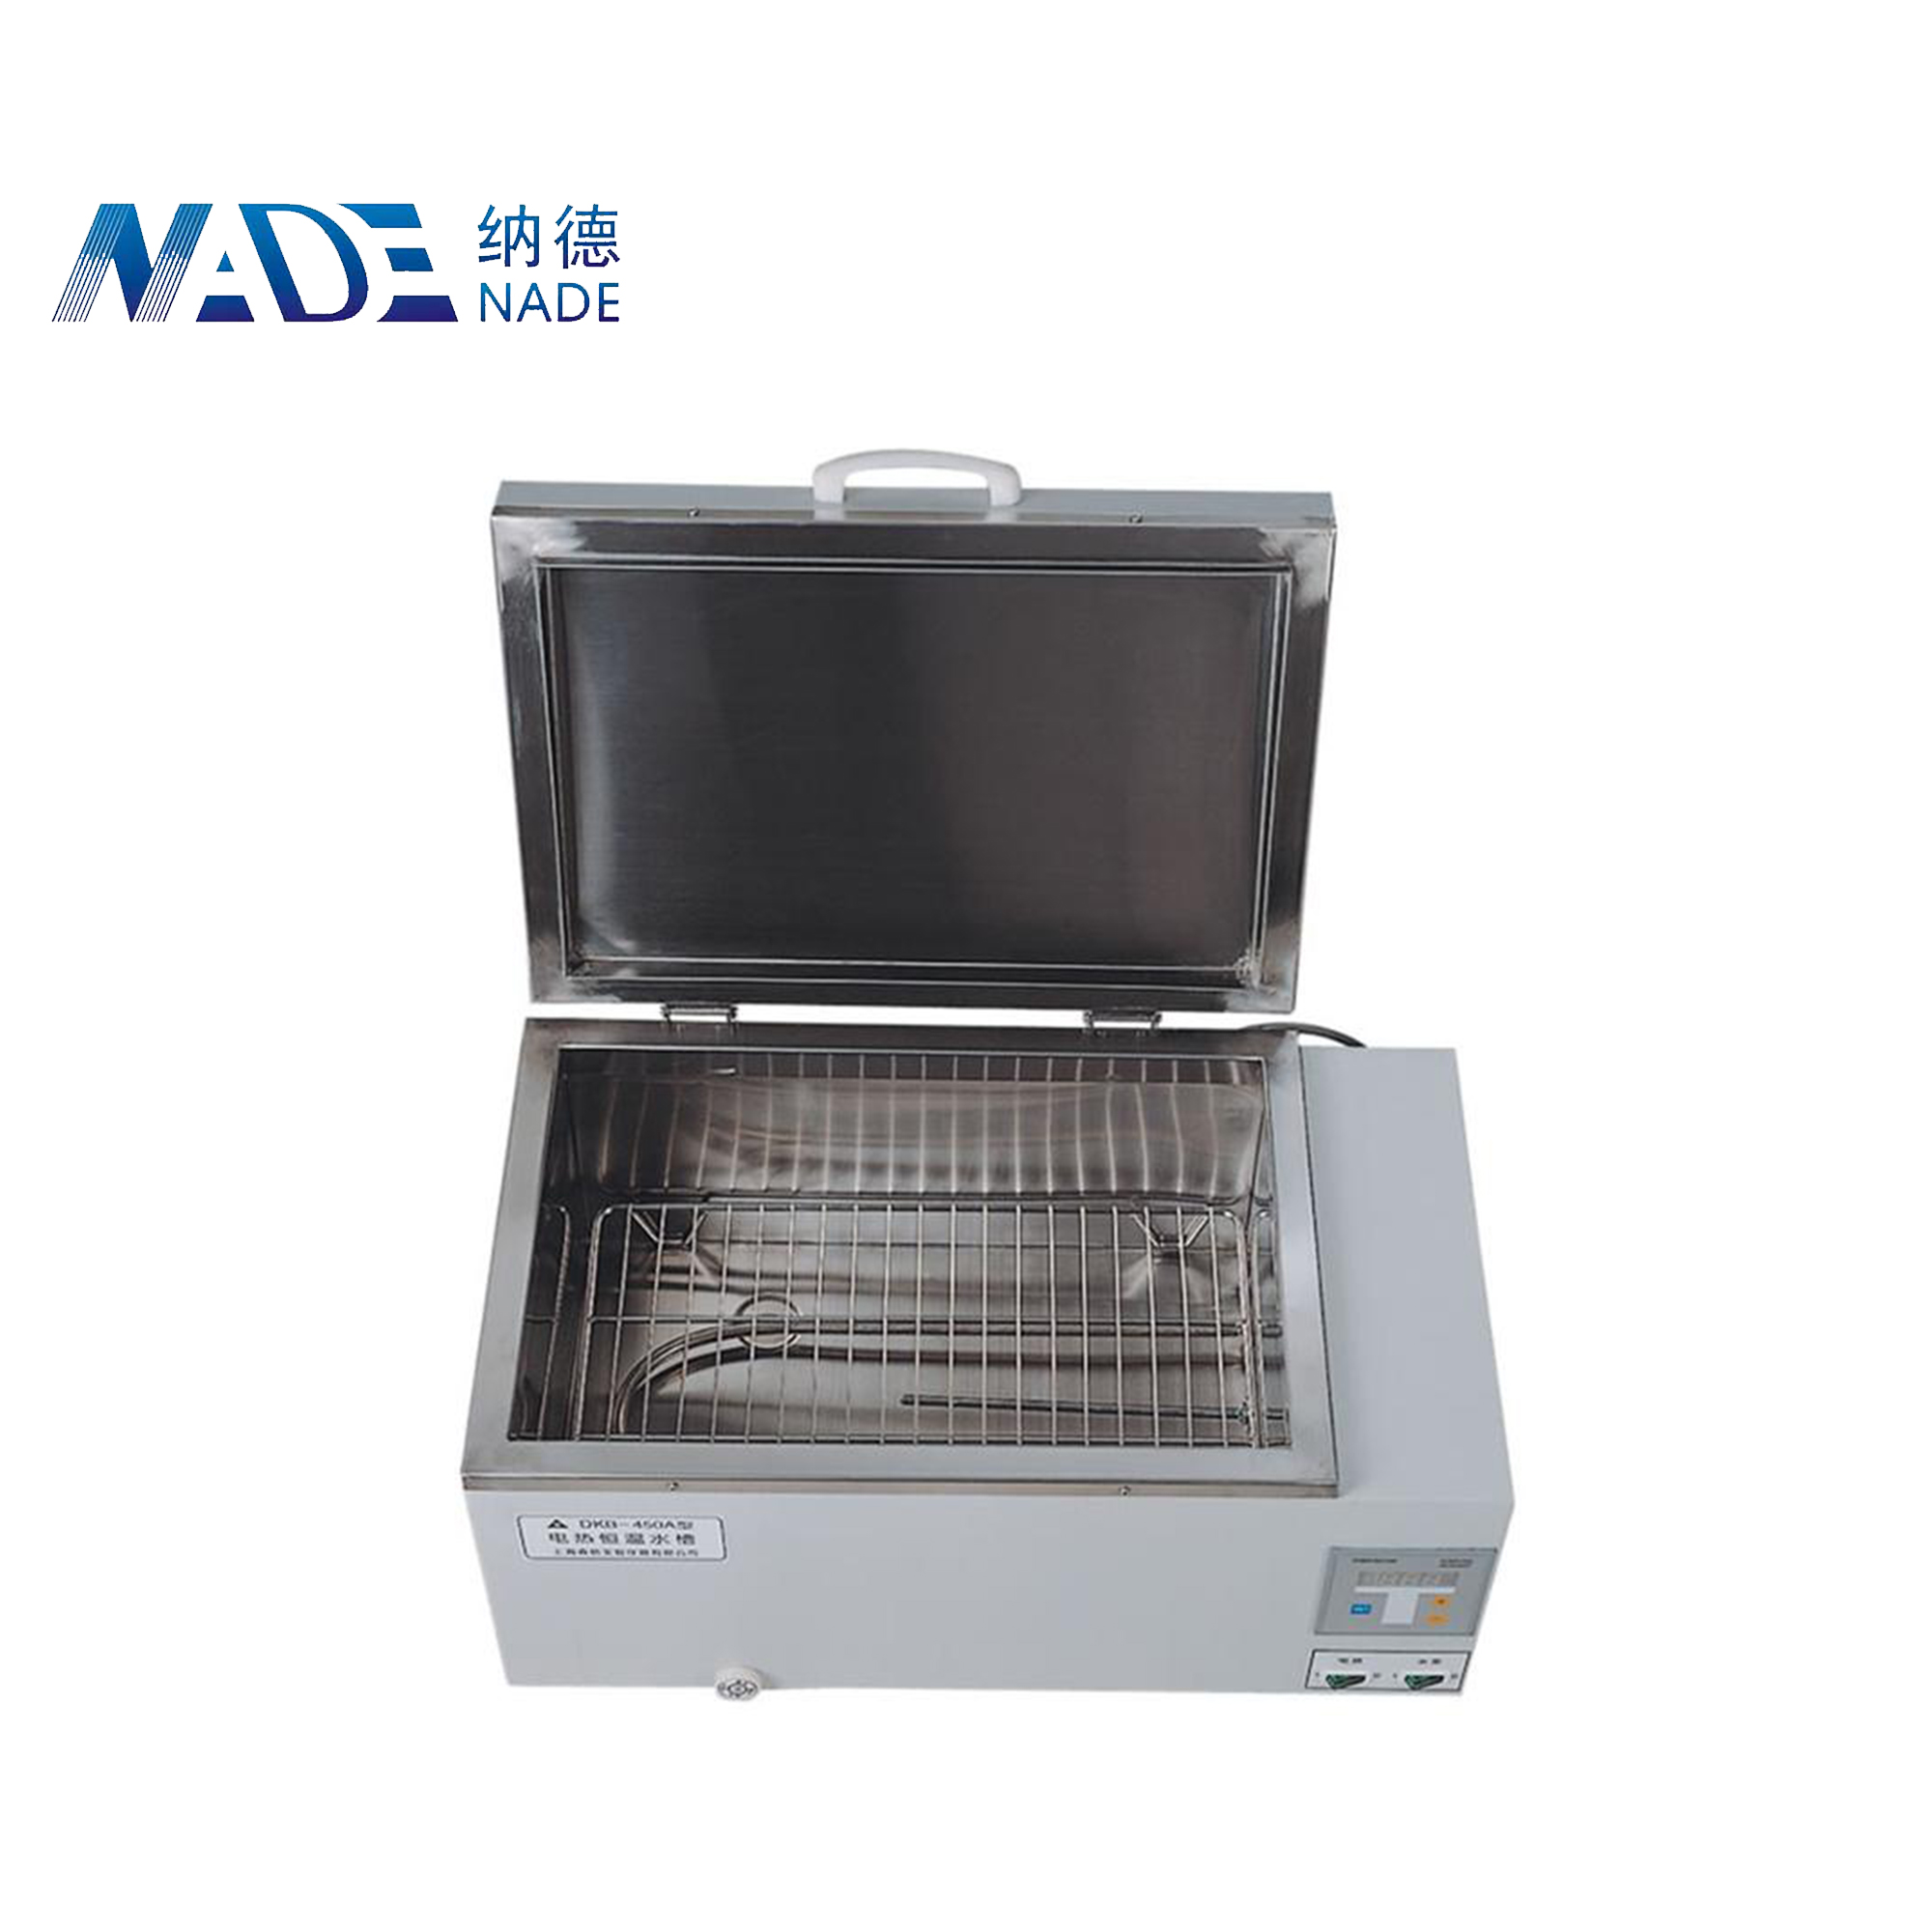 Nade Laboratory digital thermostat water bath CE Certificate DK-600B 31L +5~99C